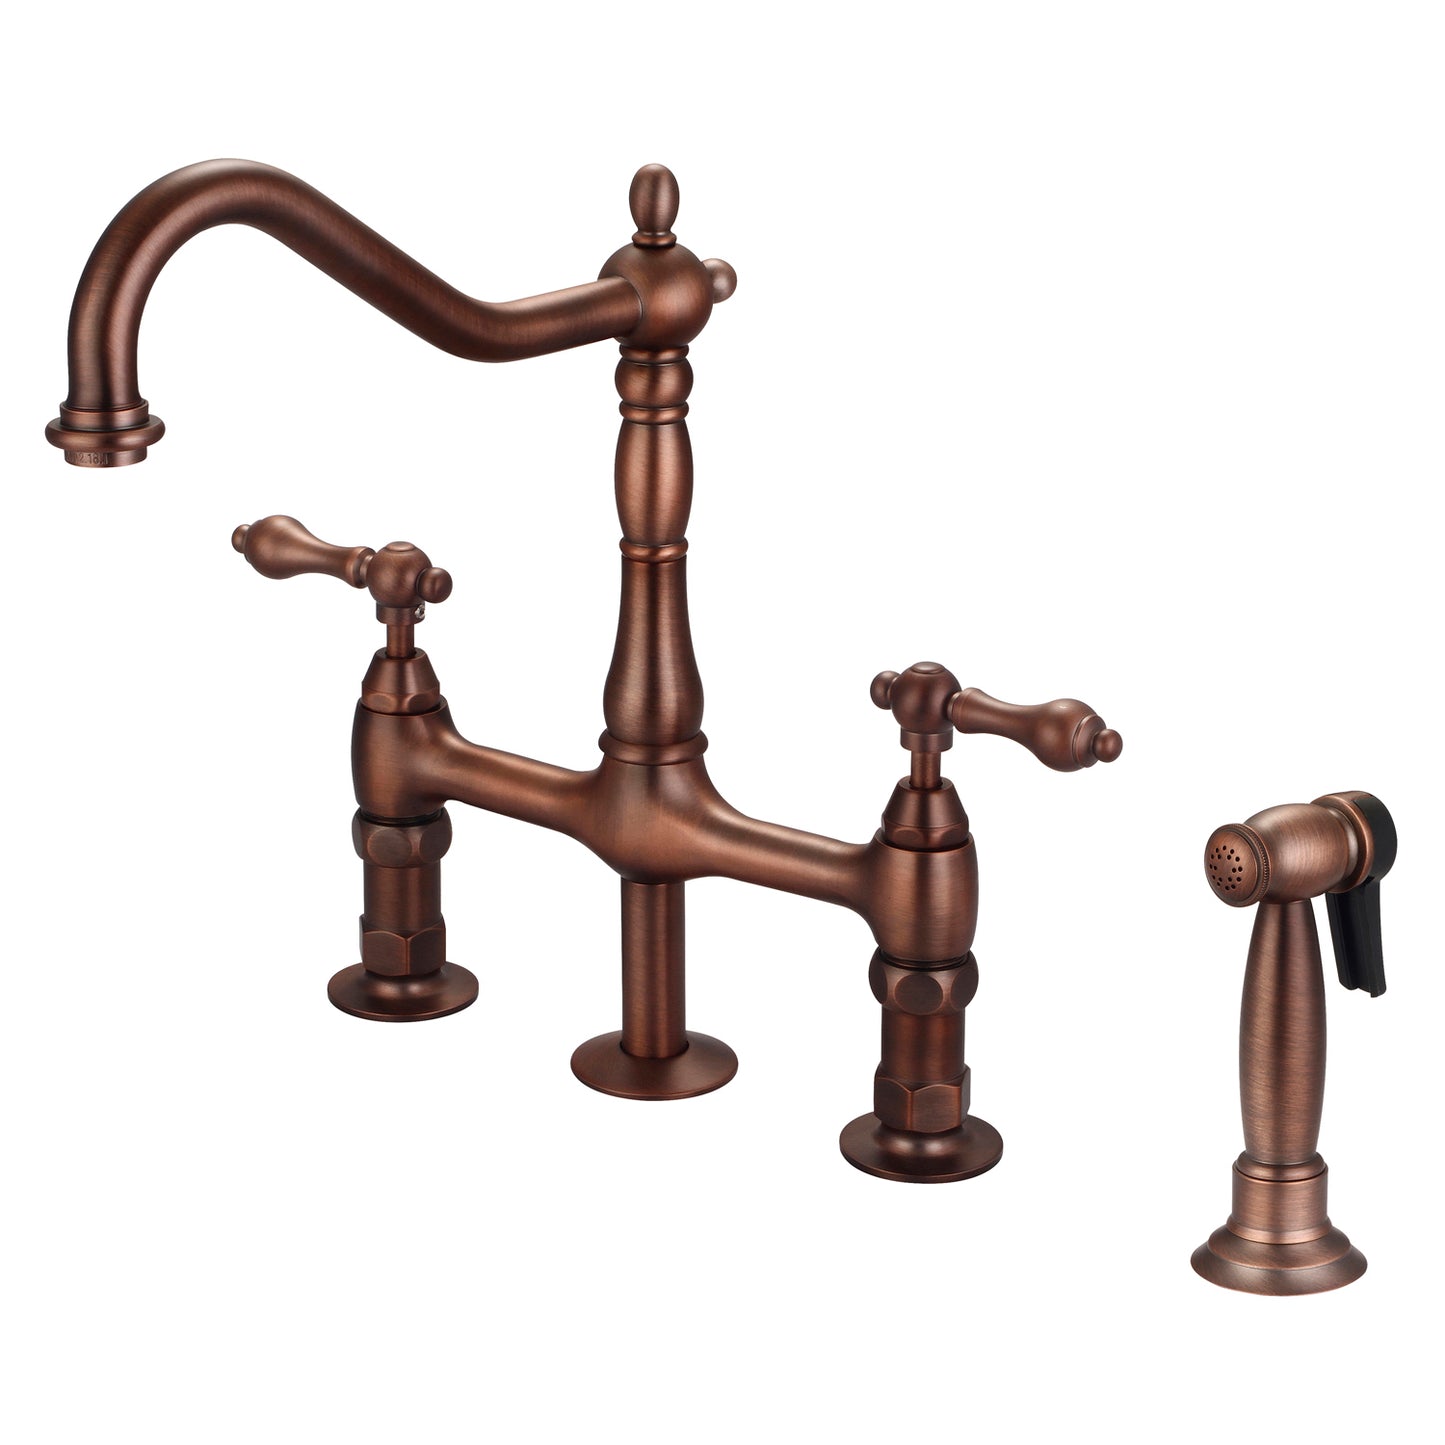 Emral Kitchen Bridge Faucet, Sidesprayer & Metal Lever Handles, Oil Rubbed Bronze